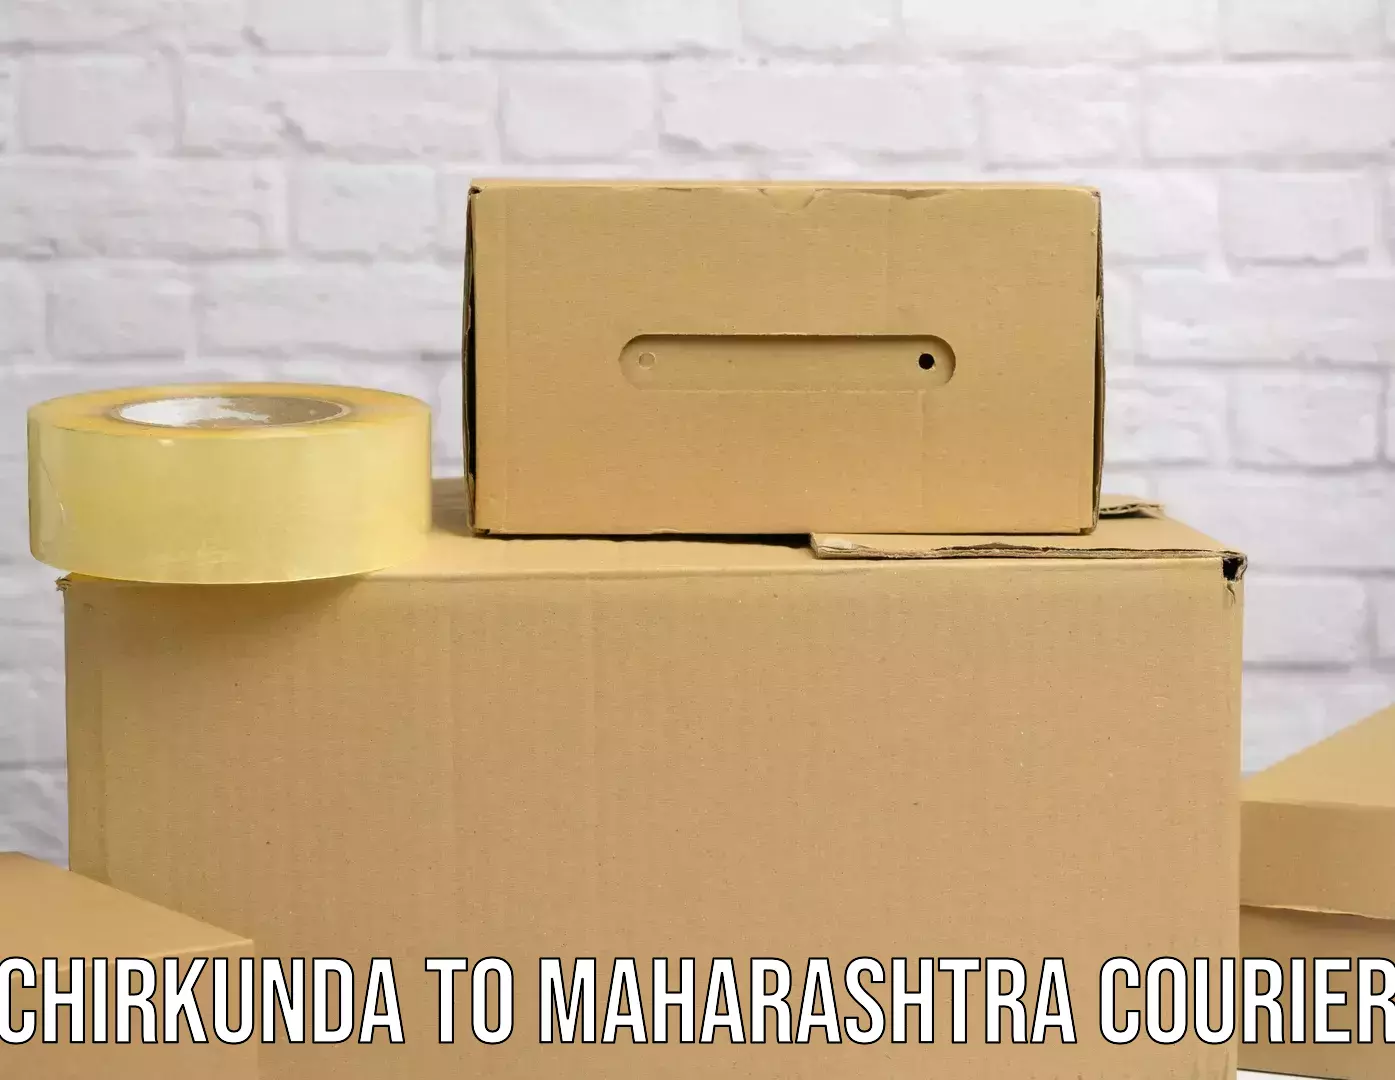 Same-day delivery options Chirkunda to Mahabaleshwar